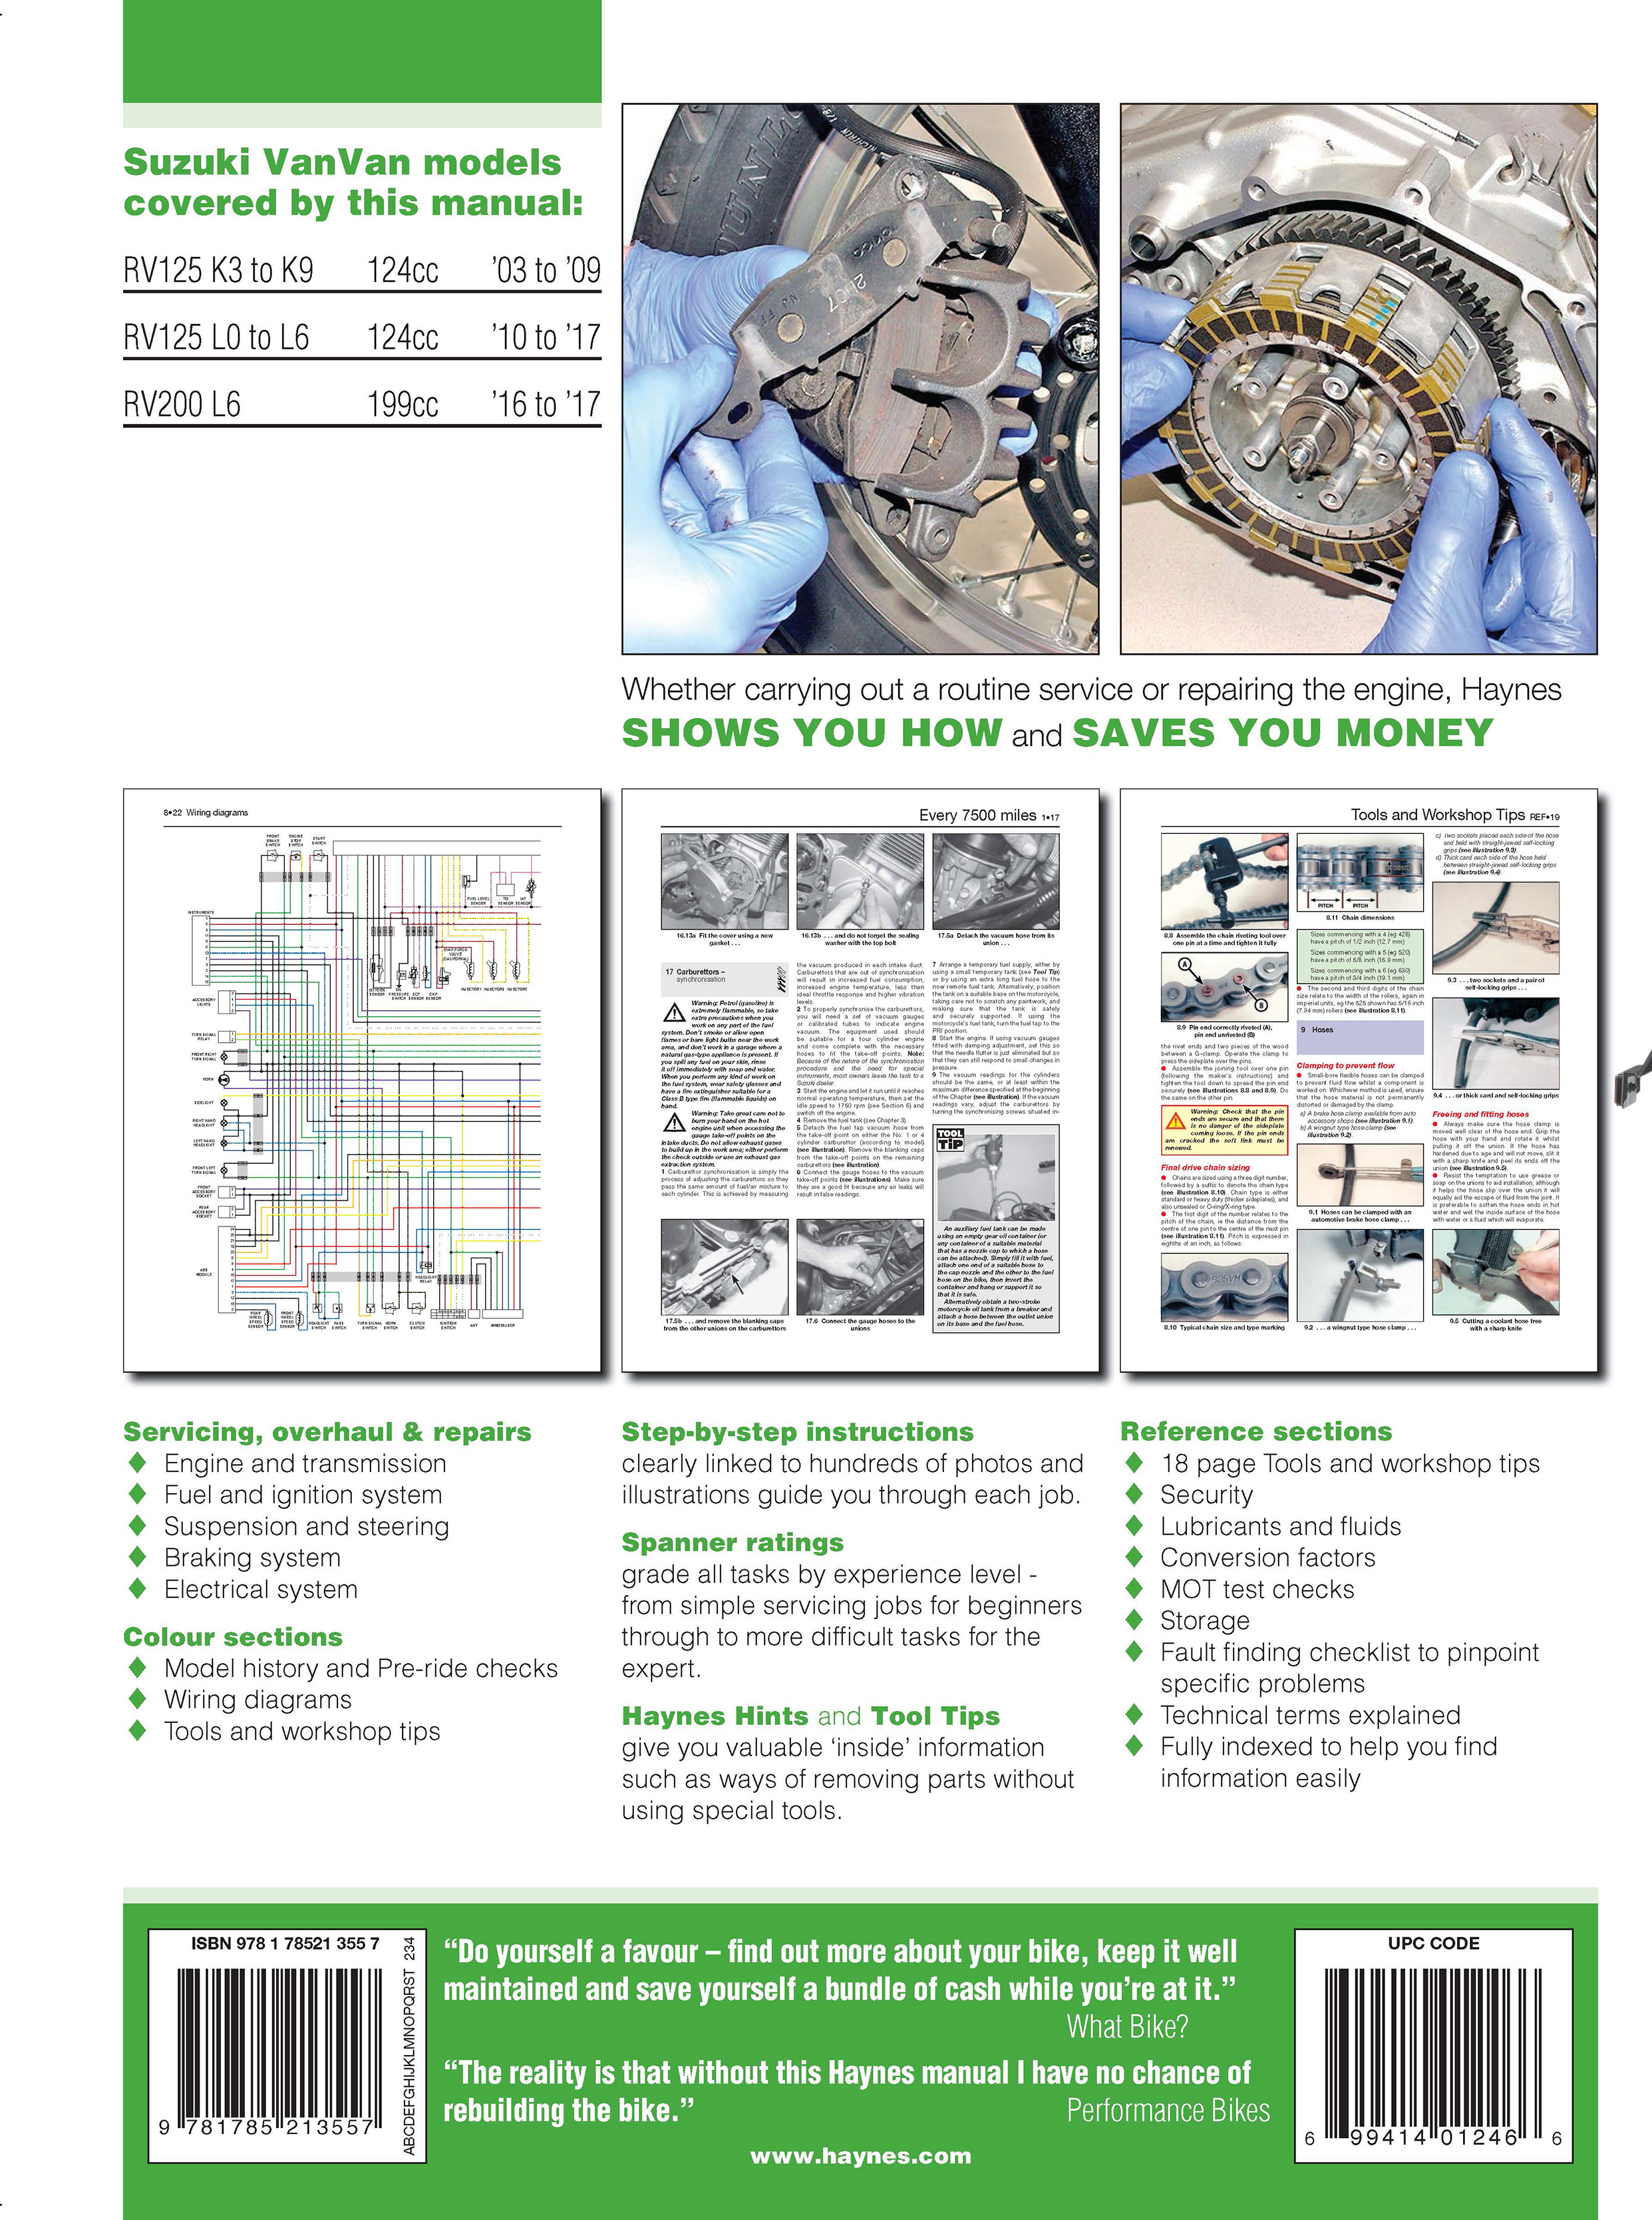 Haynes Motorcycle Service Repair Manual Pdf Download ...